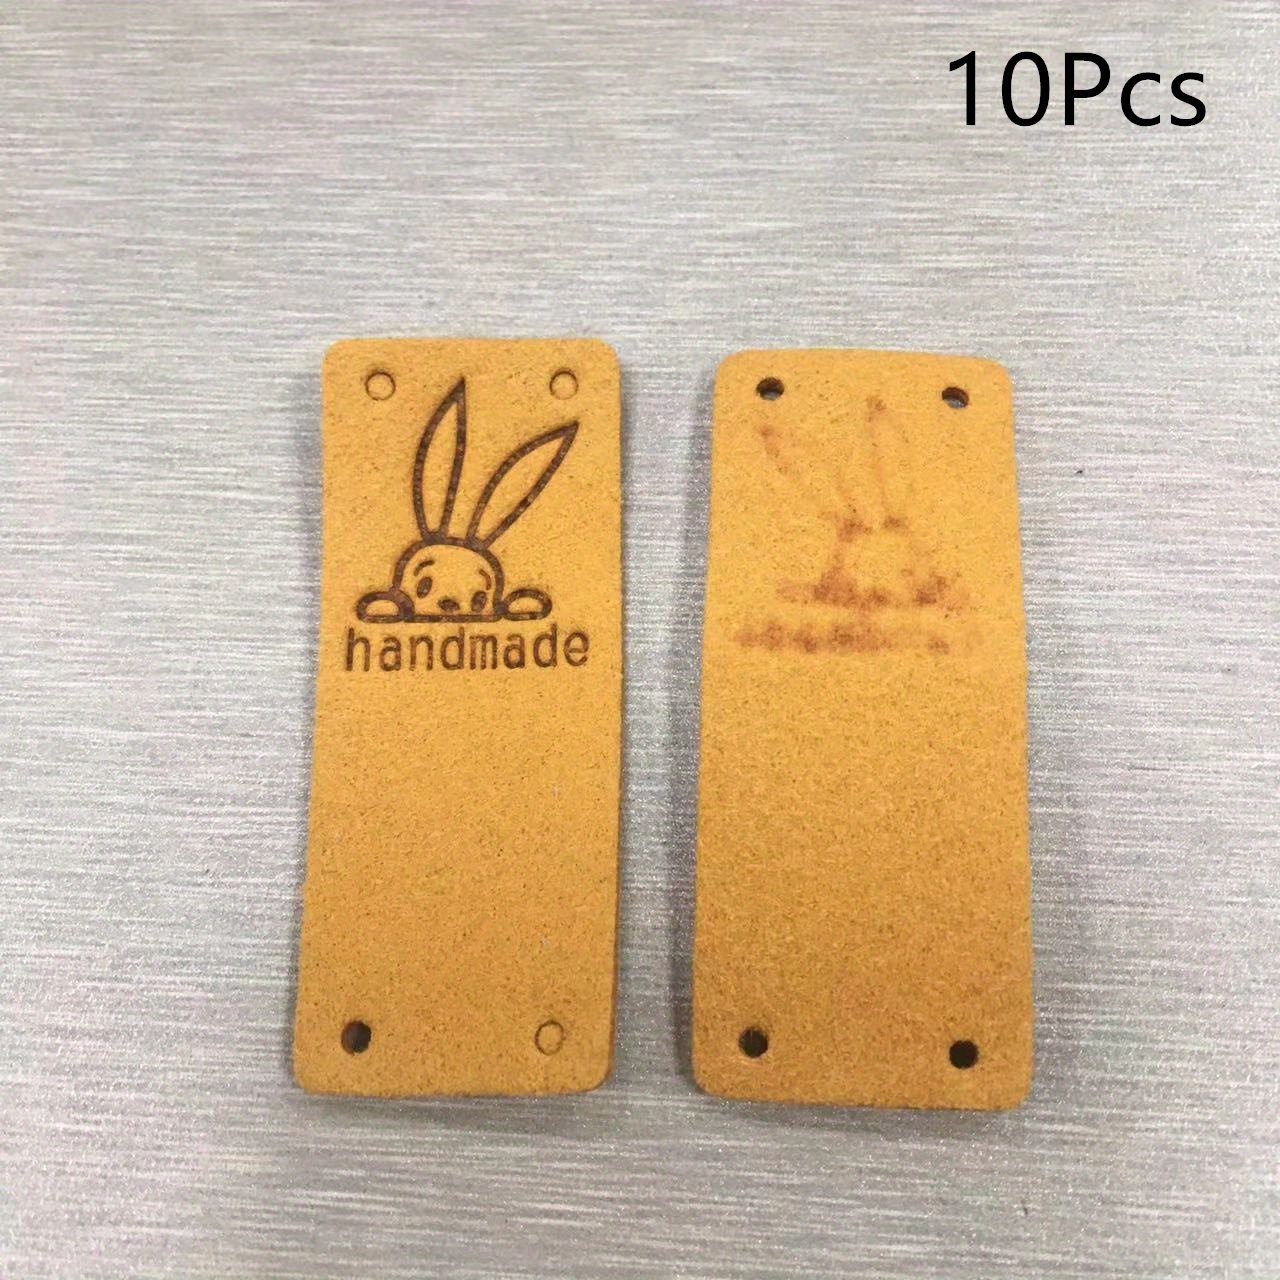 20Pcs Handmade Tags For Handmade Label Kawaii Sewing Leather Tags Rabbit